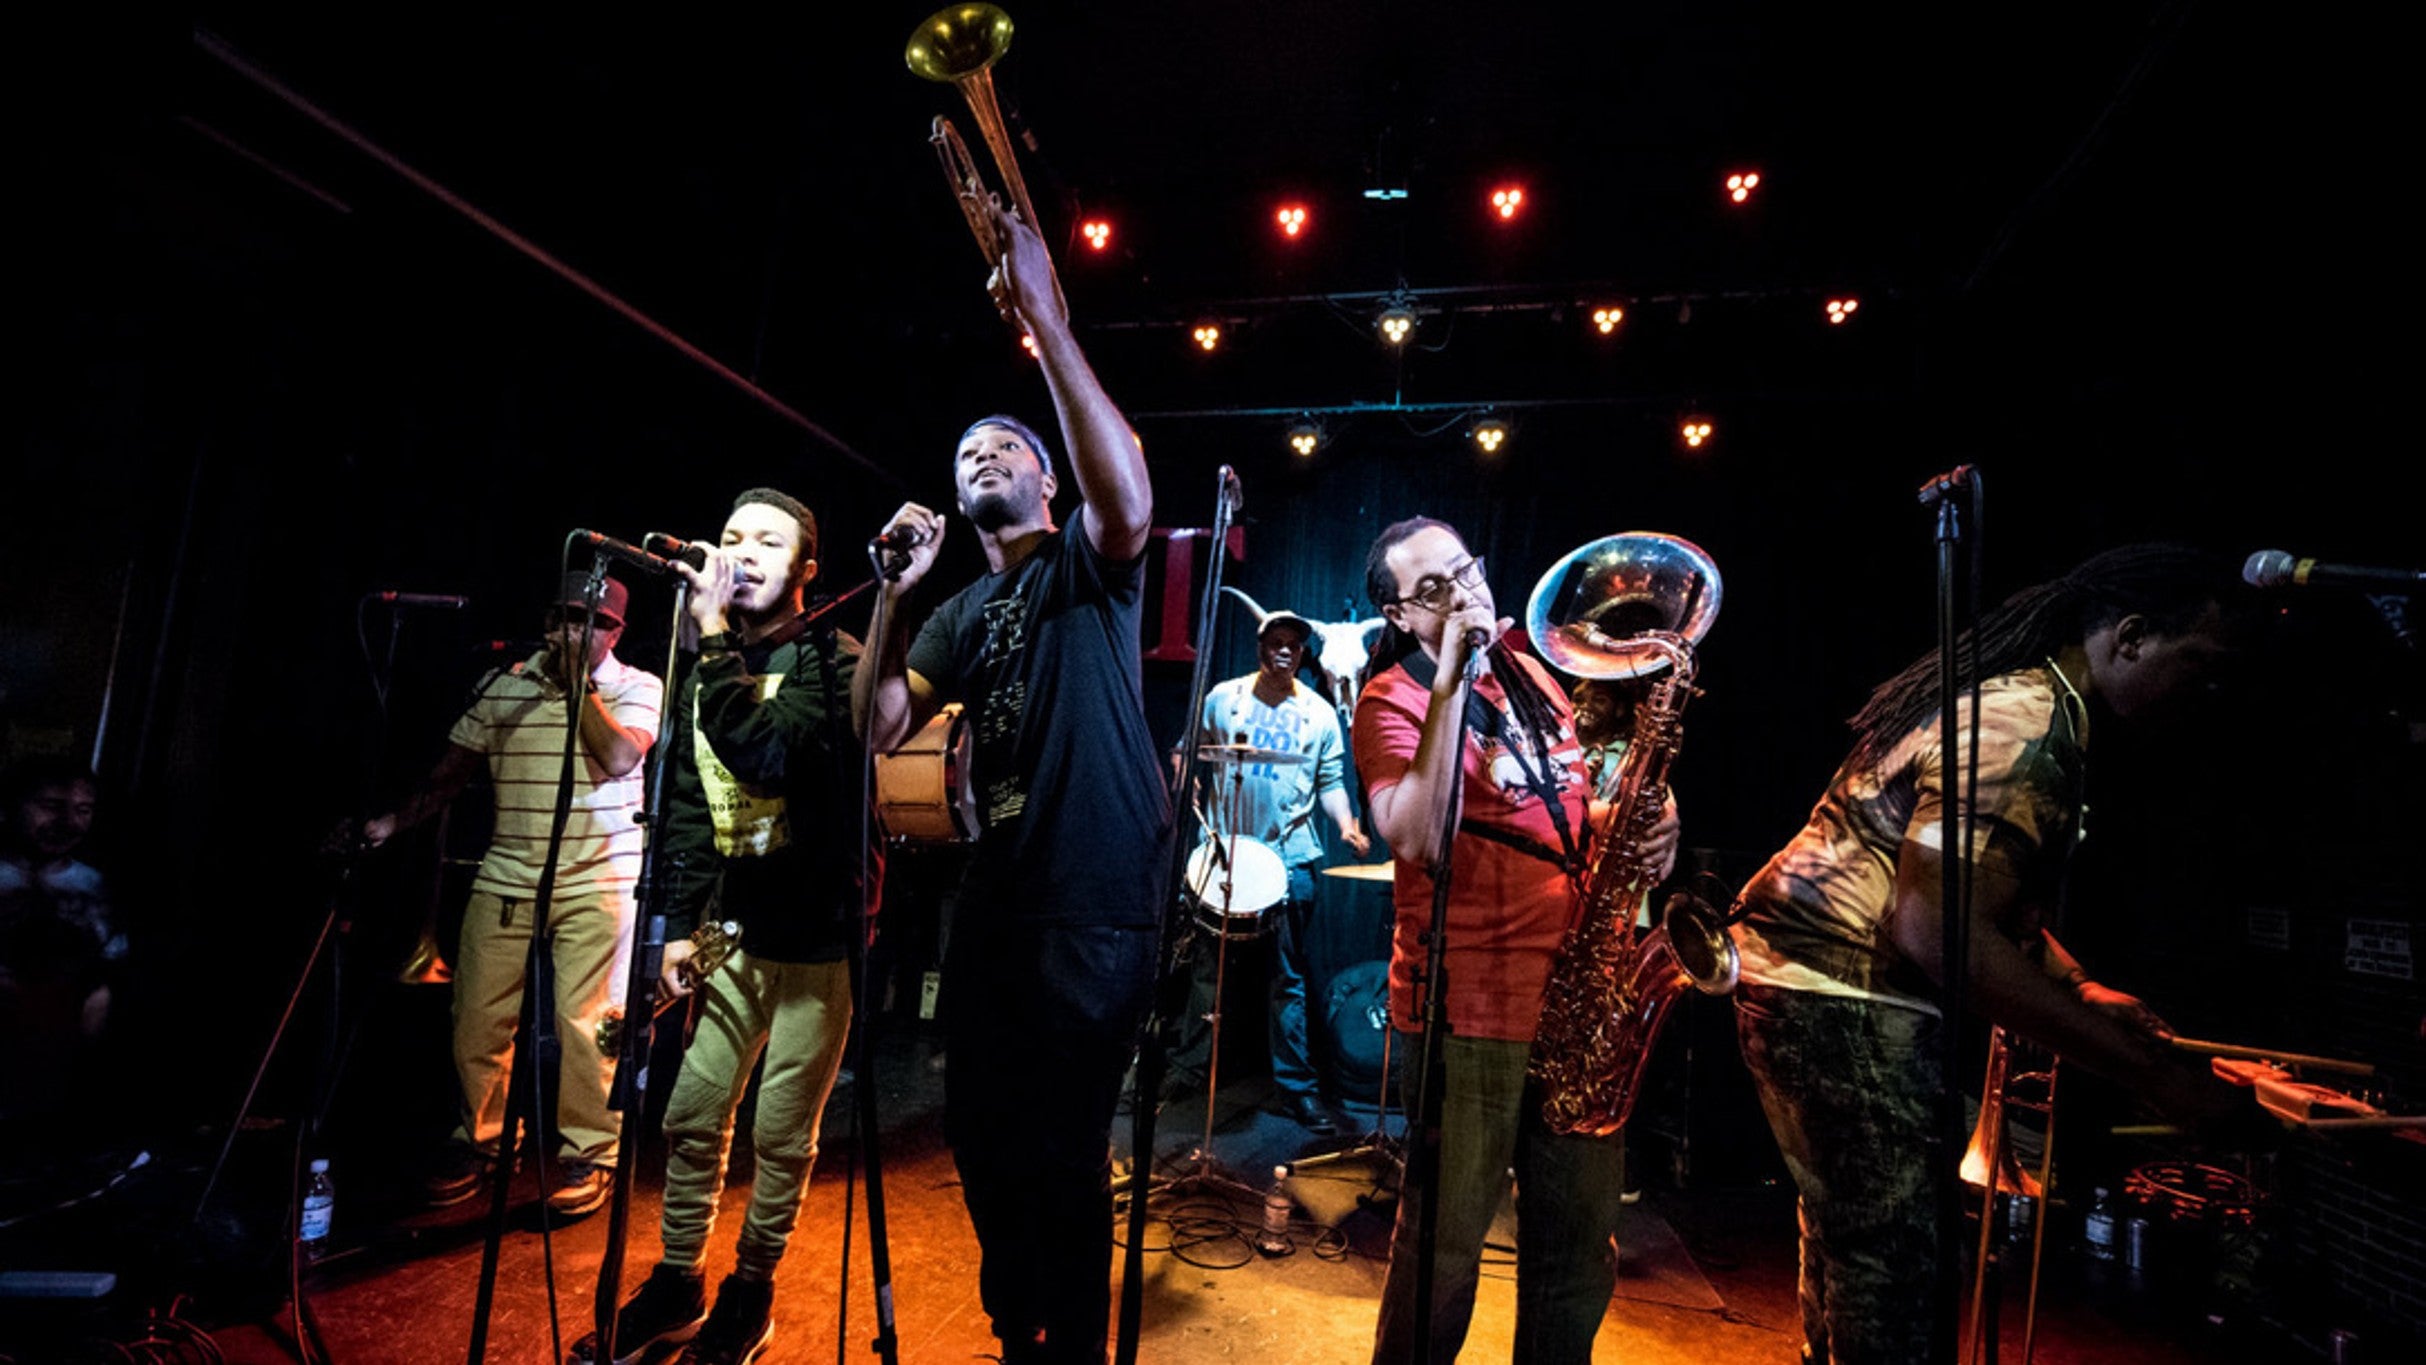 Rebirth Brass Band in Denver promo photo for Live Nation presale offer code